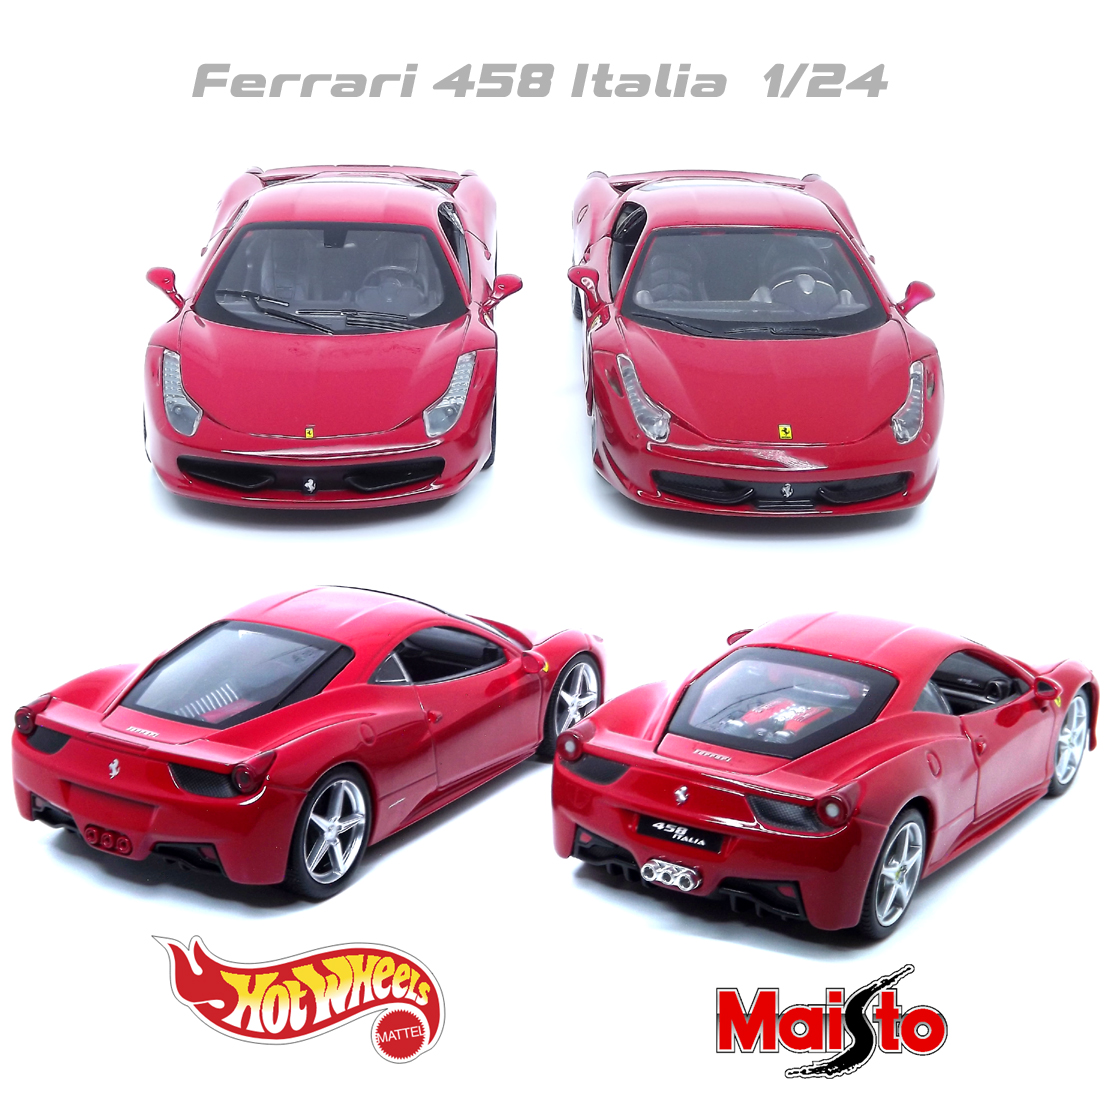 Ferrari 458 Itália Die-cast (Maisto x Hot Wheels) 